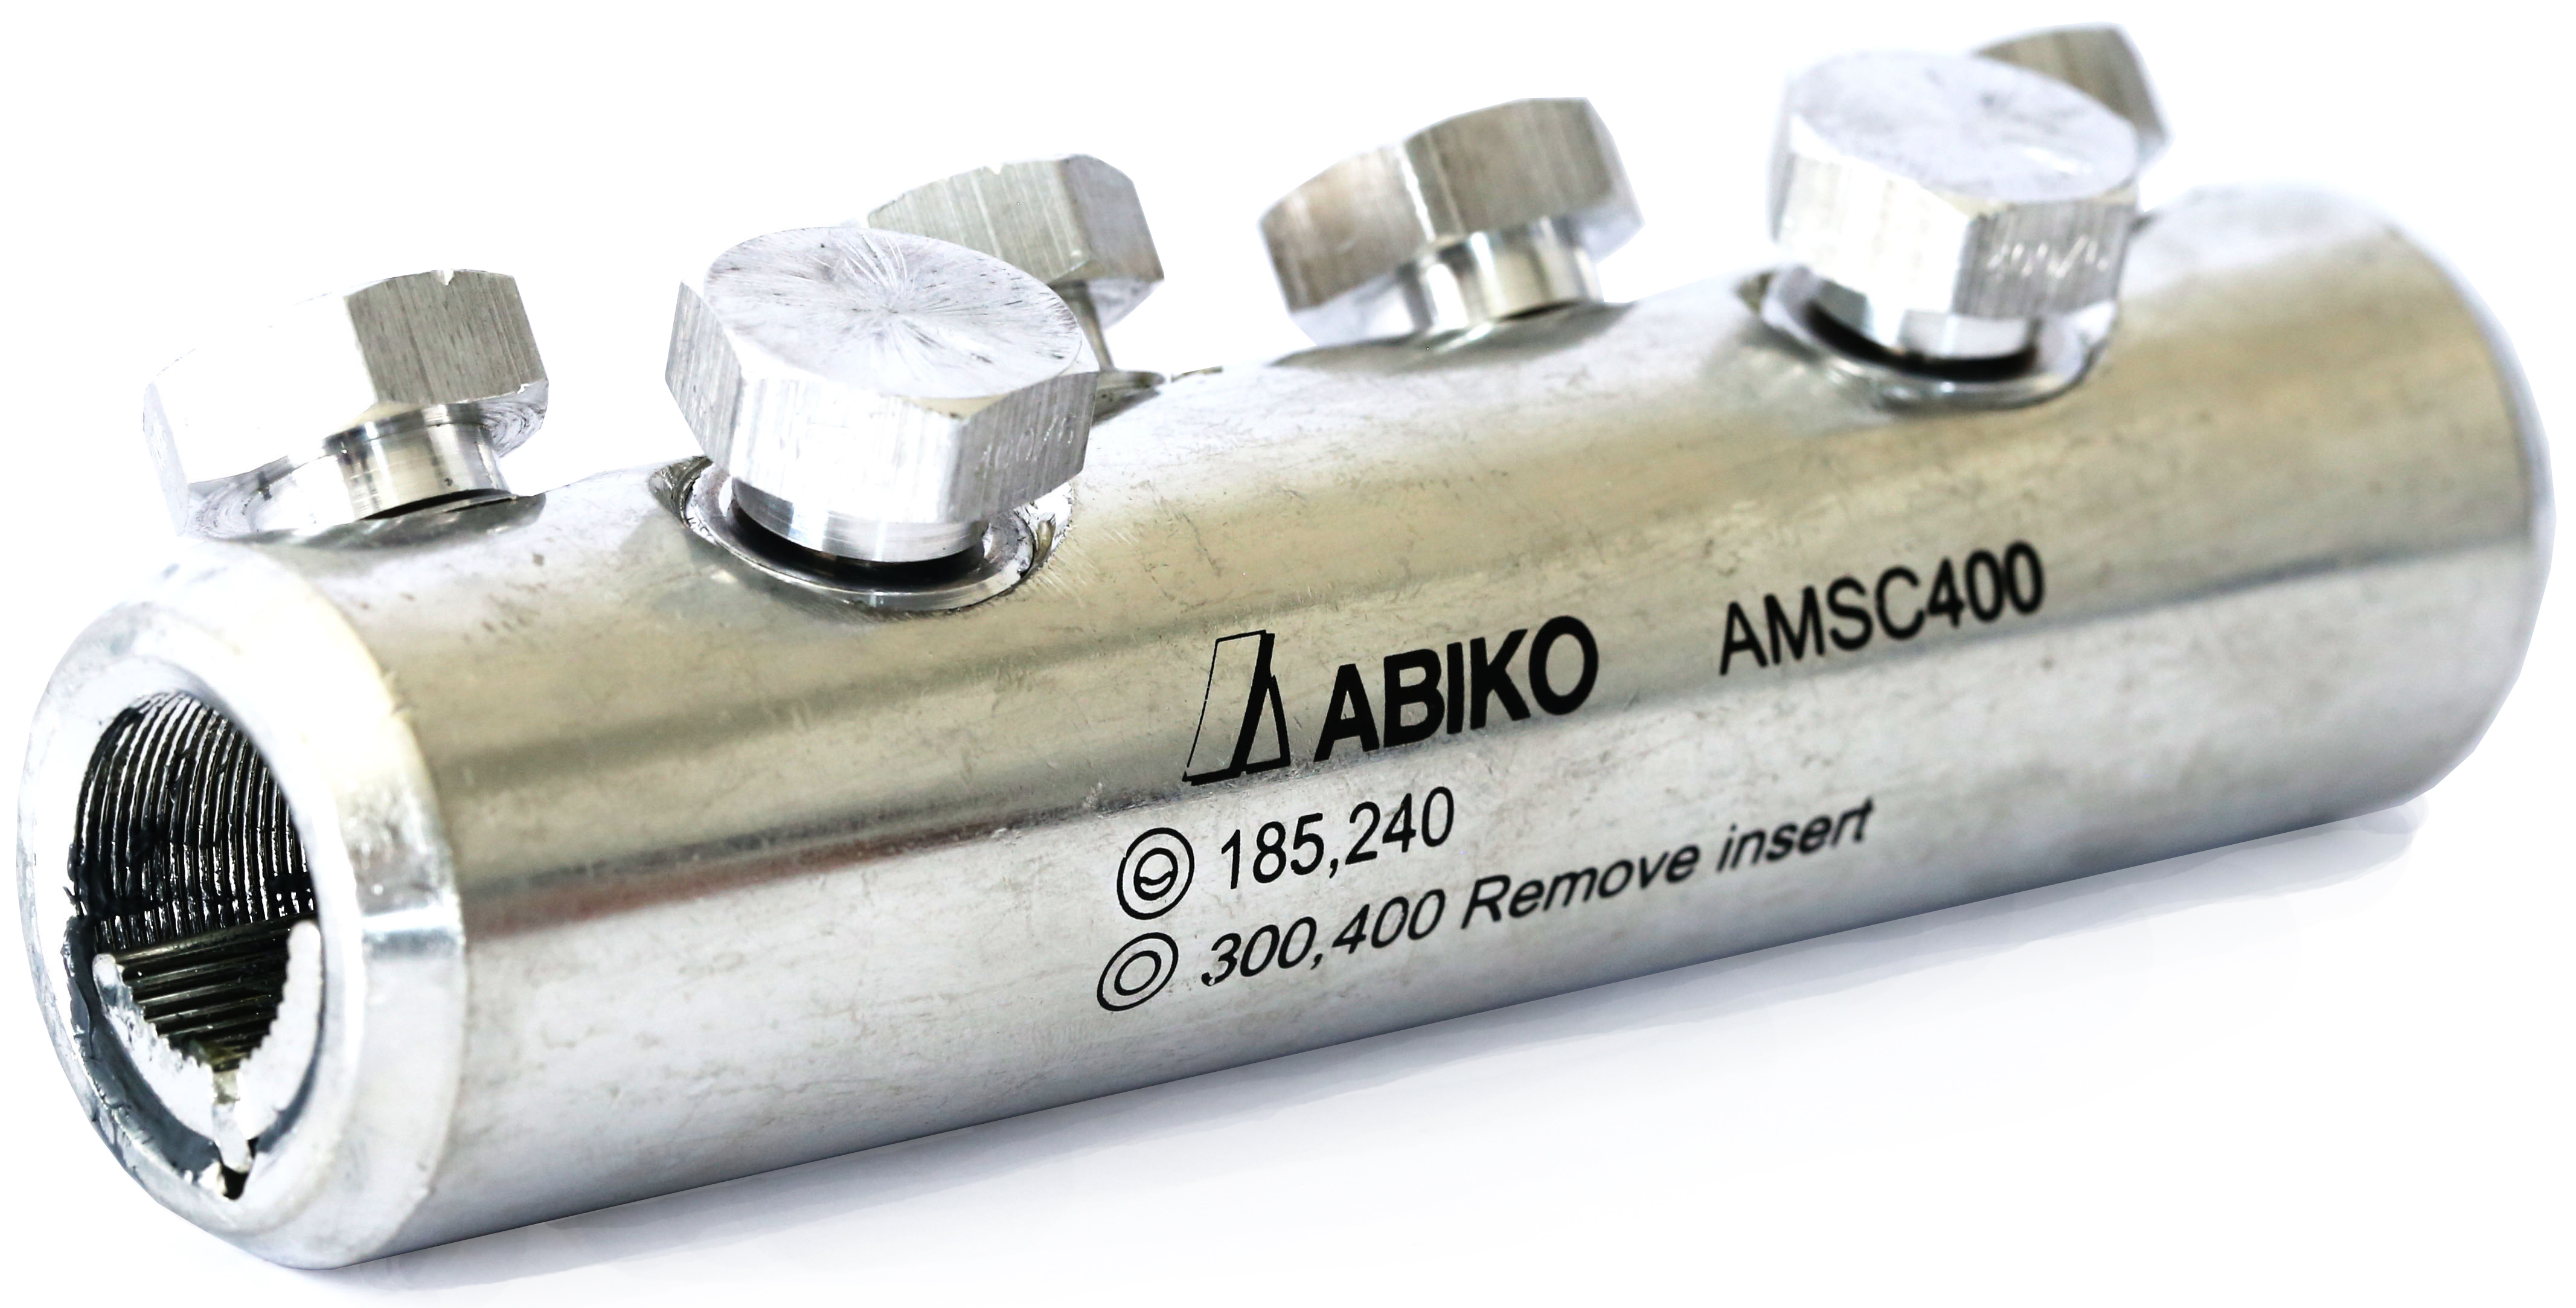 Abiko shearbolt connector